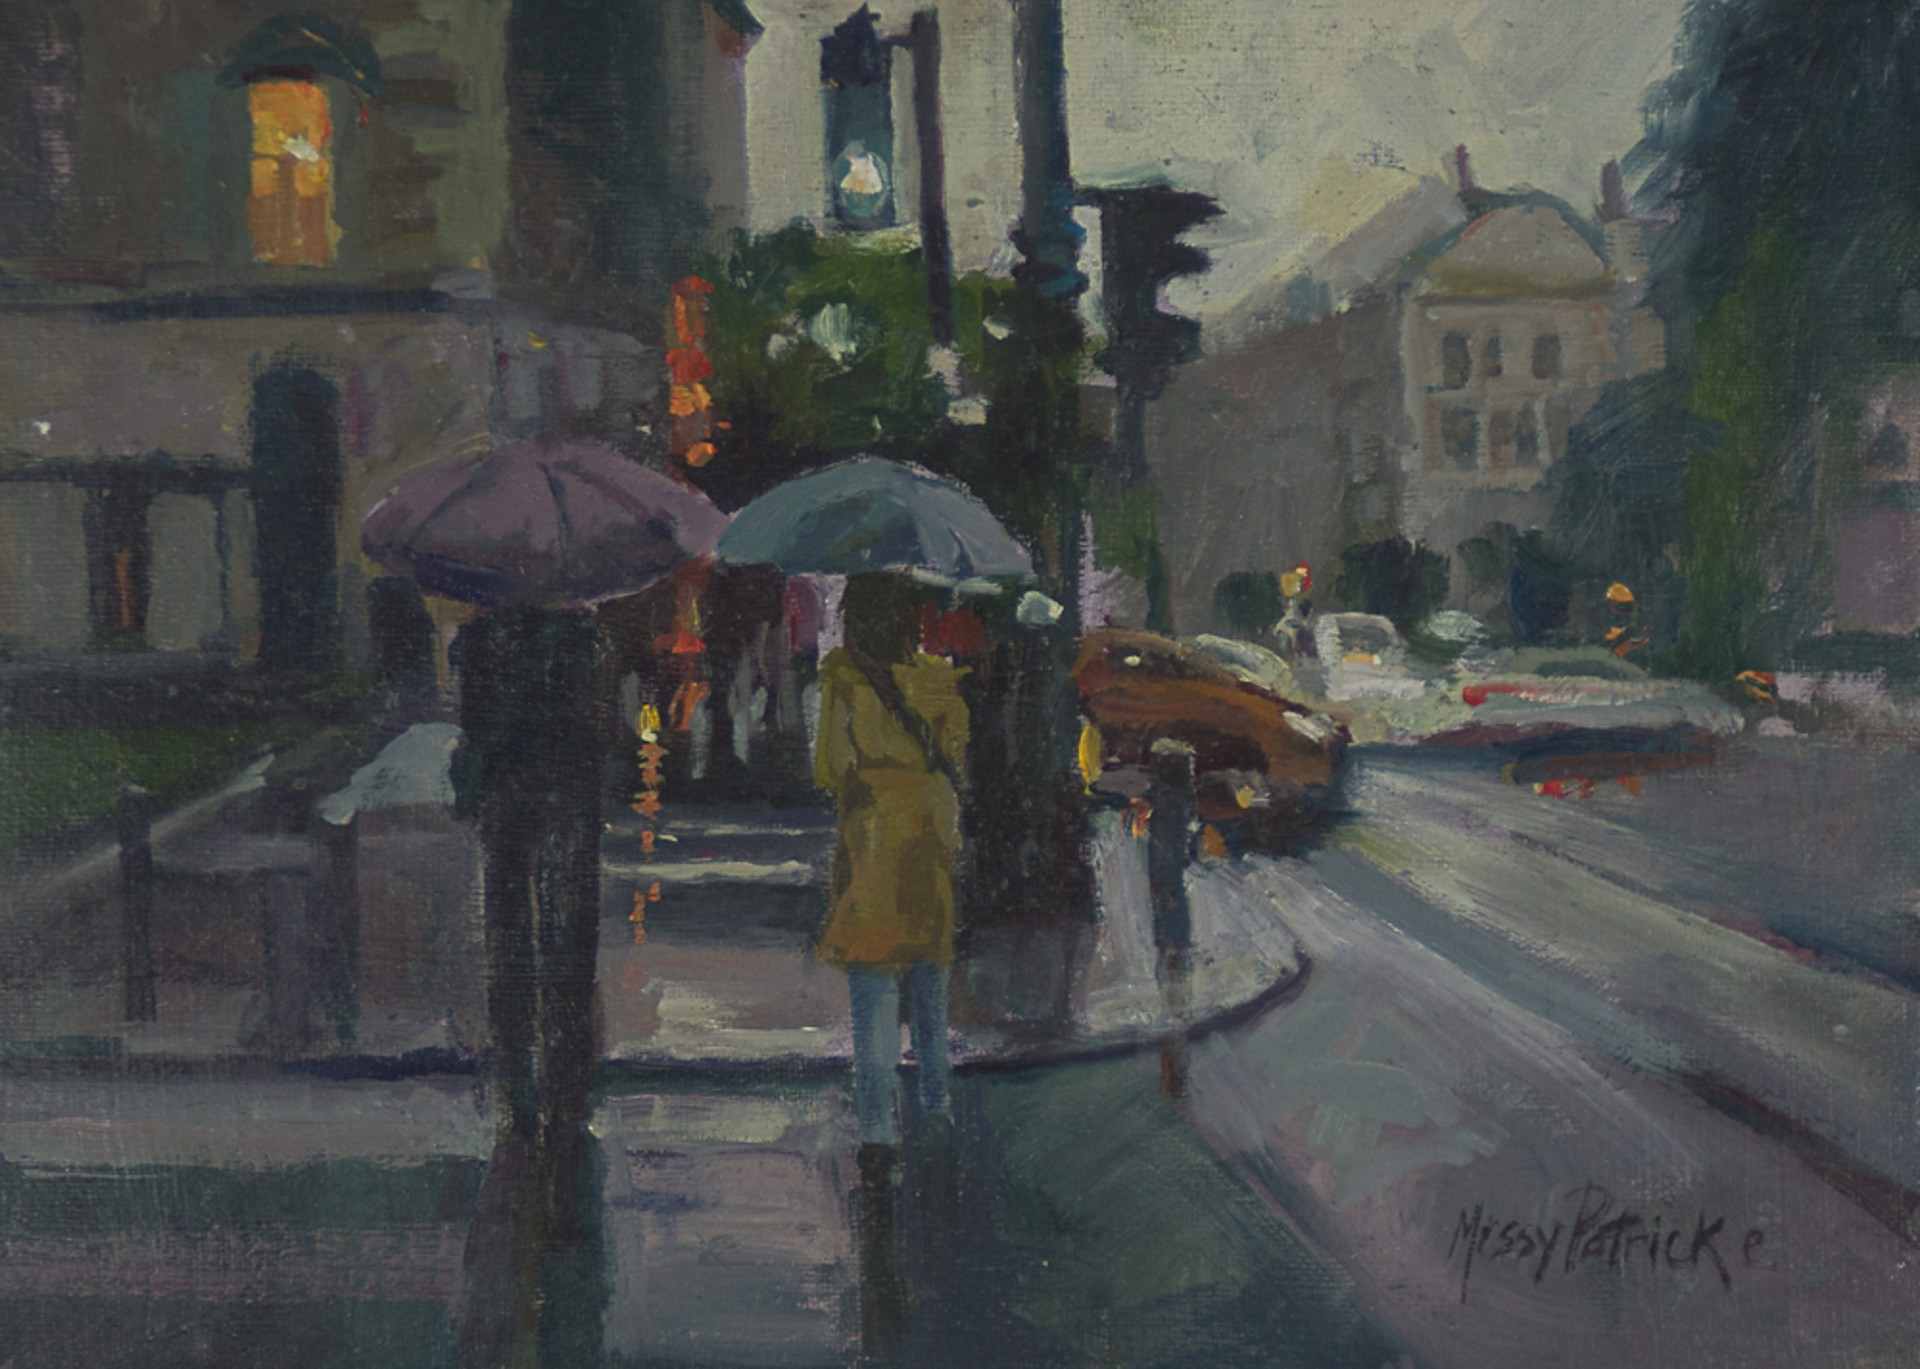 Rainy Night in the City by Missy Patrick